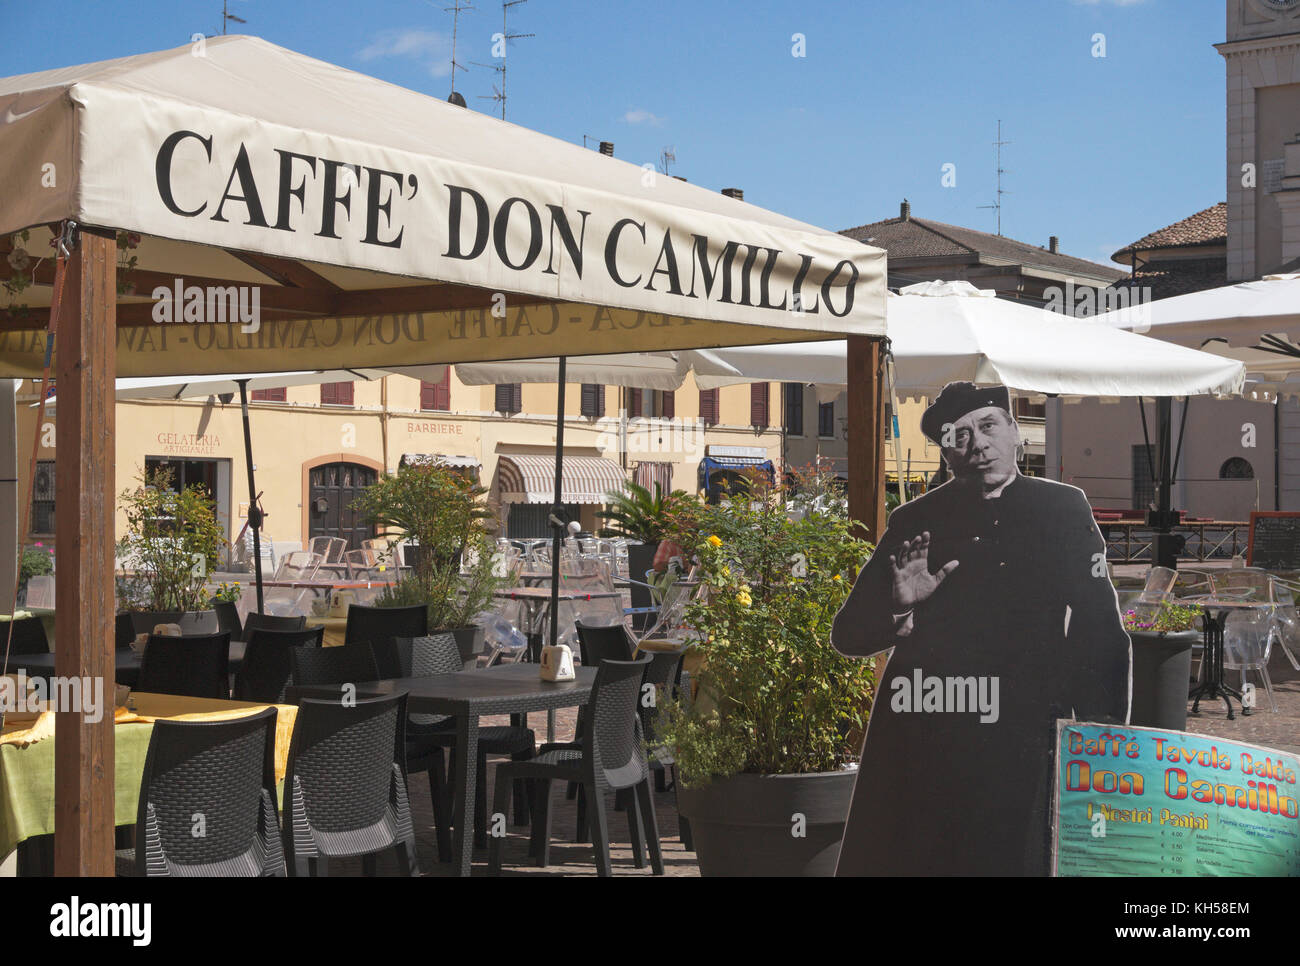 Don Camillo cafe in Brescello, Emilia Romagna, Italy Stock Photo